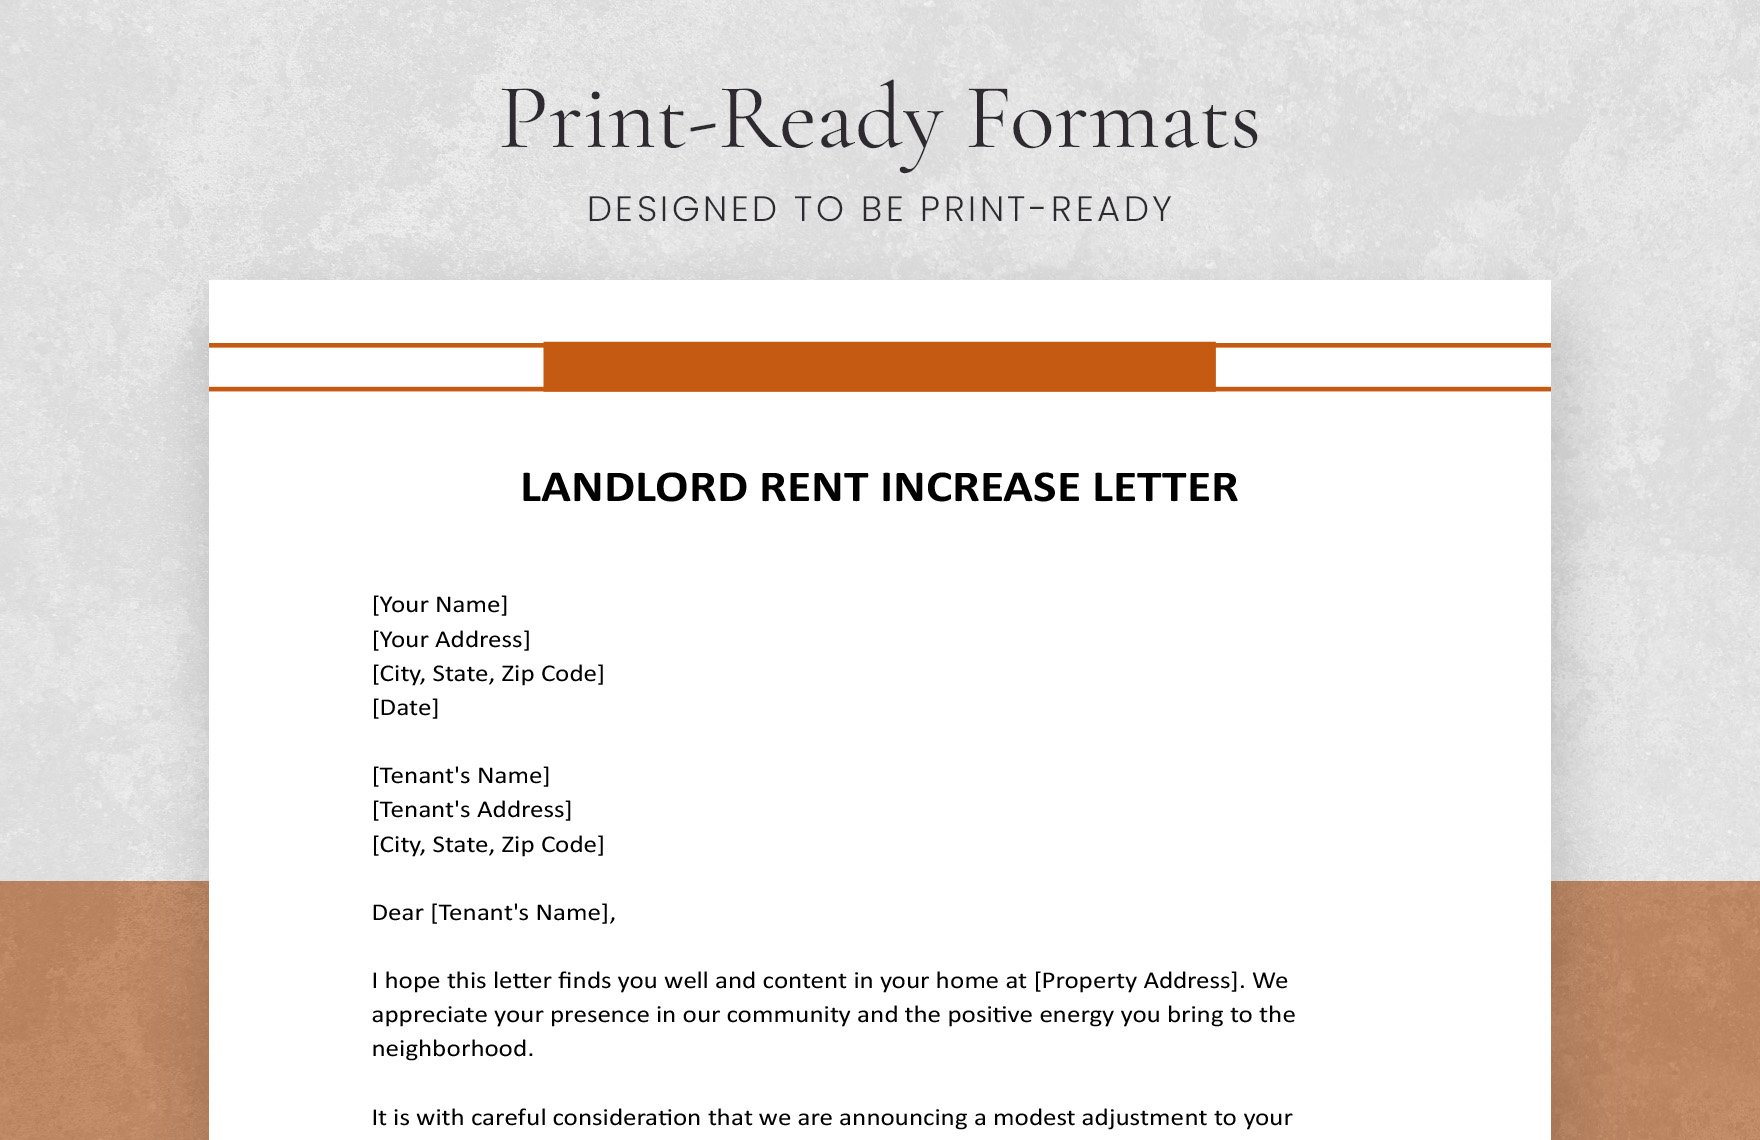 Landlord Rent Increase Letter